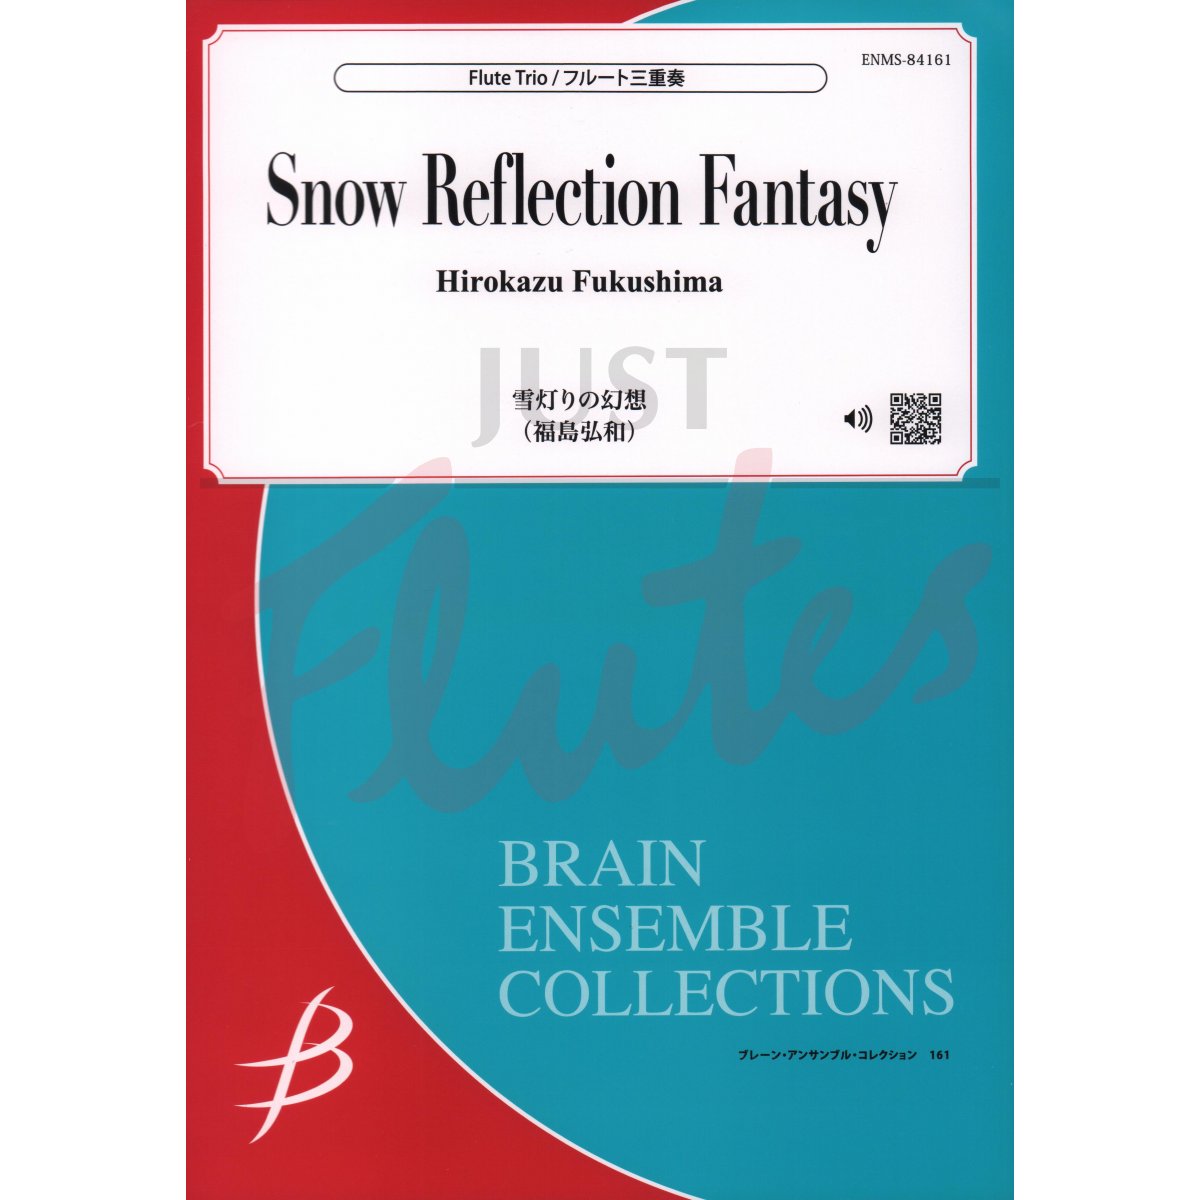 Snow Reflection Fantasy for Flute Trio